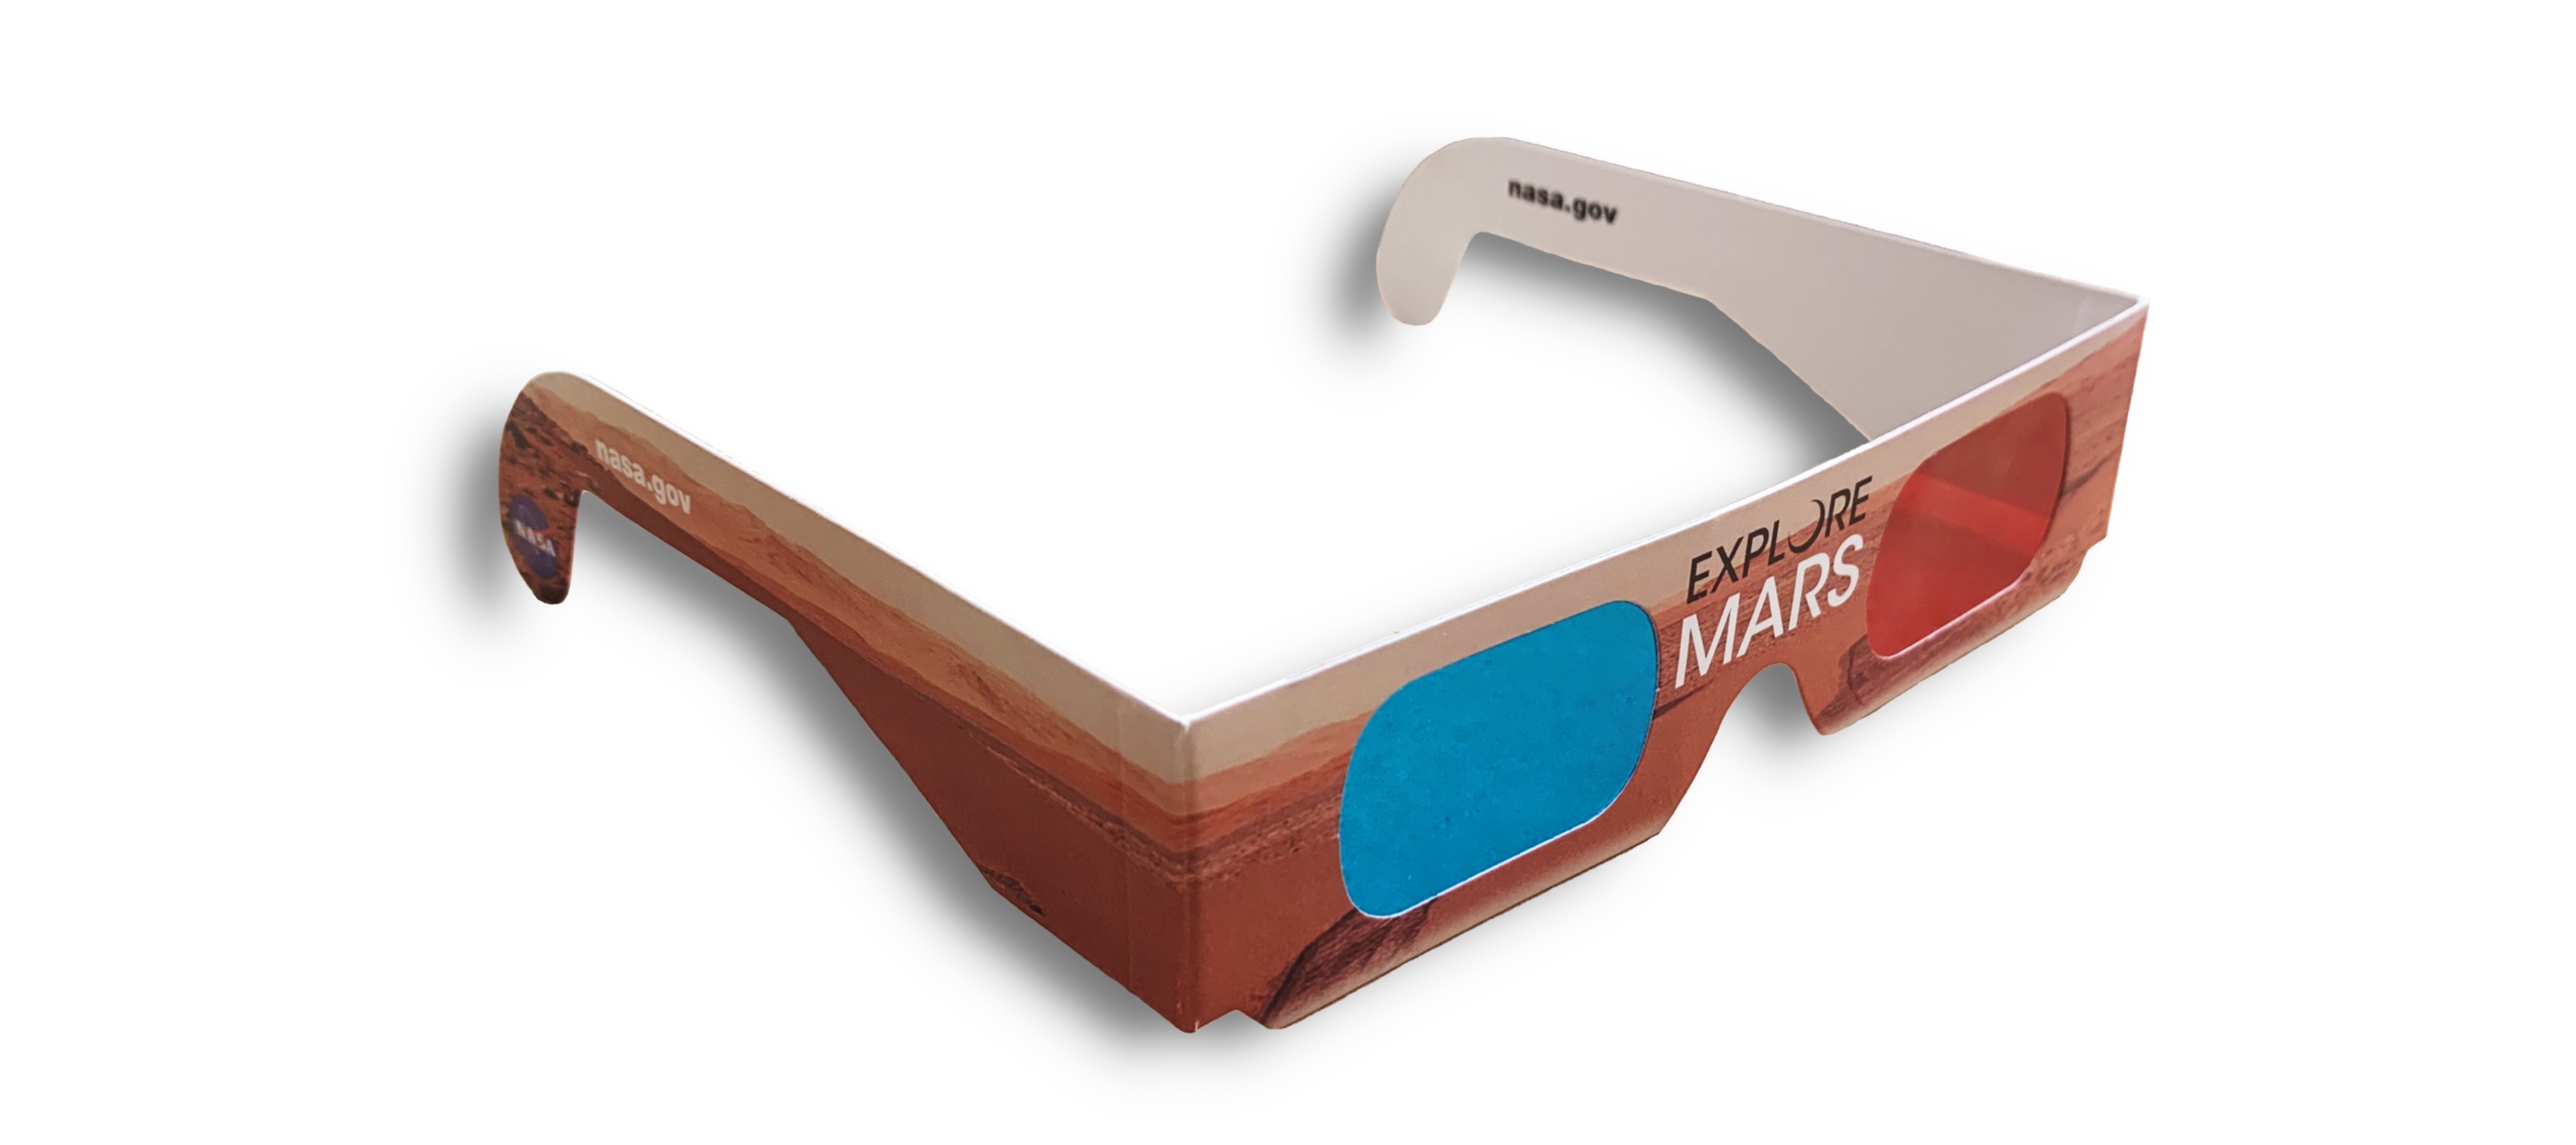 Mars 3D Glasses